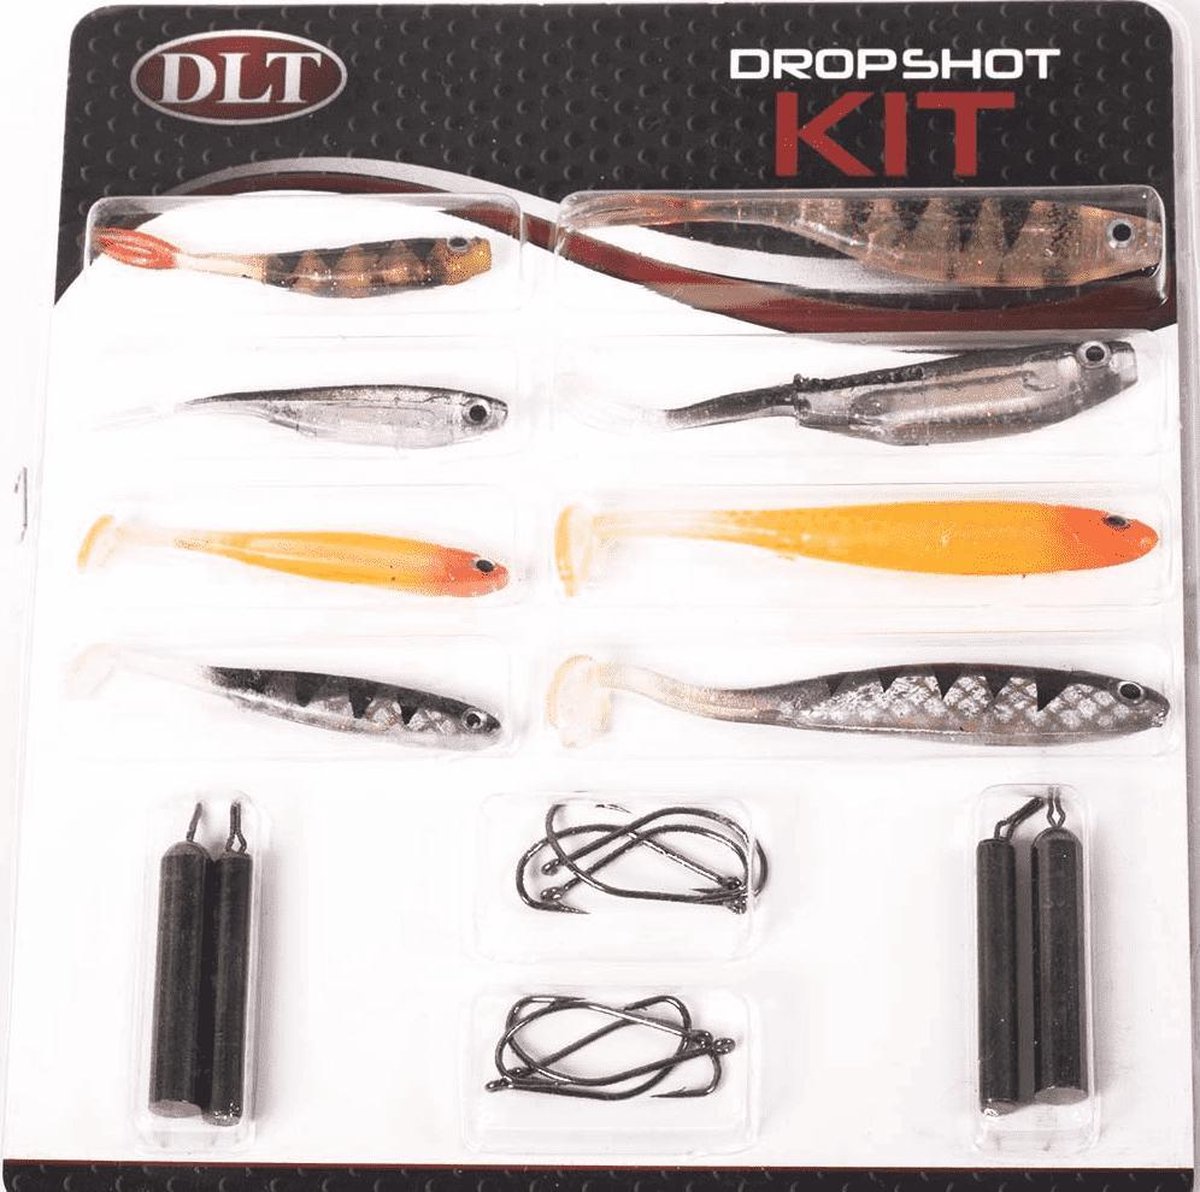 DLT Dropshot Kit - Complete set - 20 Delen - Streetfishing